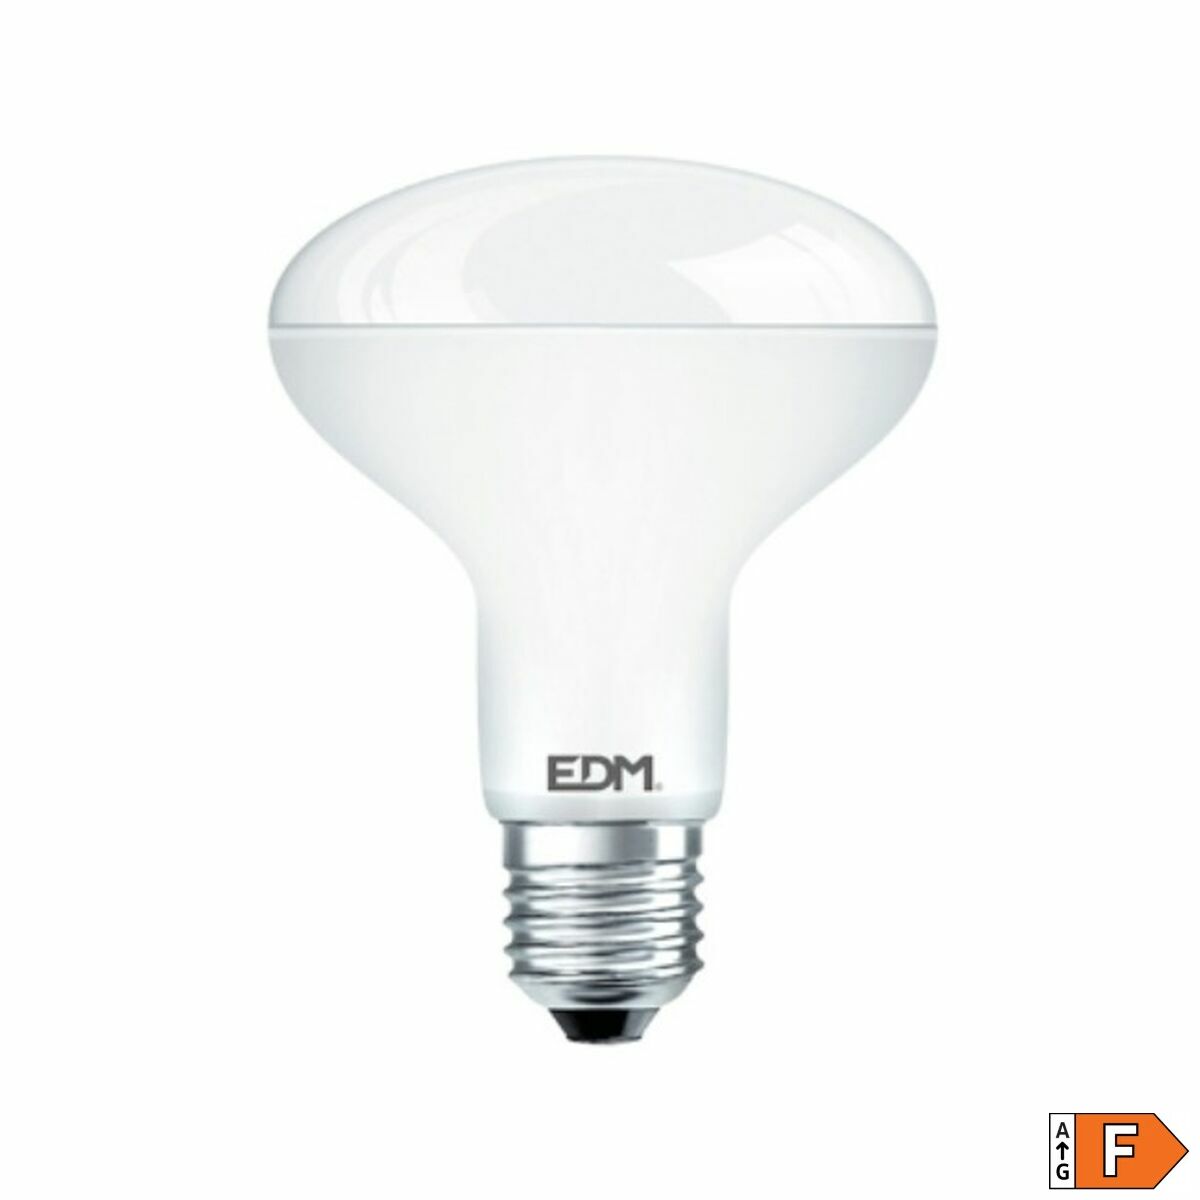 Ledlamp EDM Reflector F 10 W E27 810 Lm Ø 7,9 x 11 cm (3200 K)